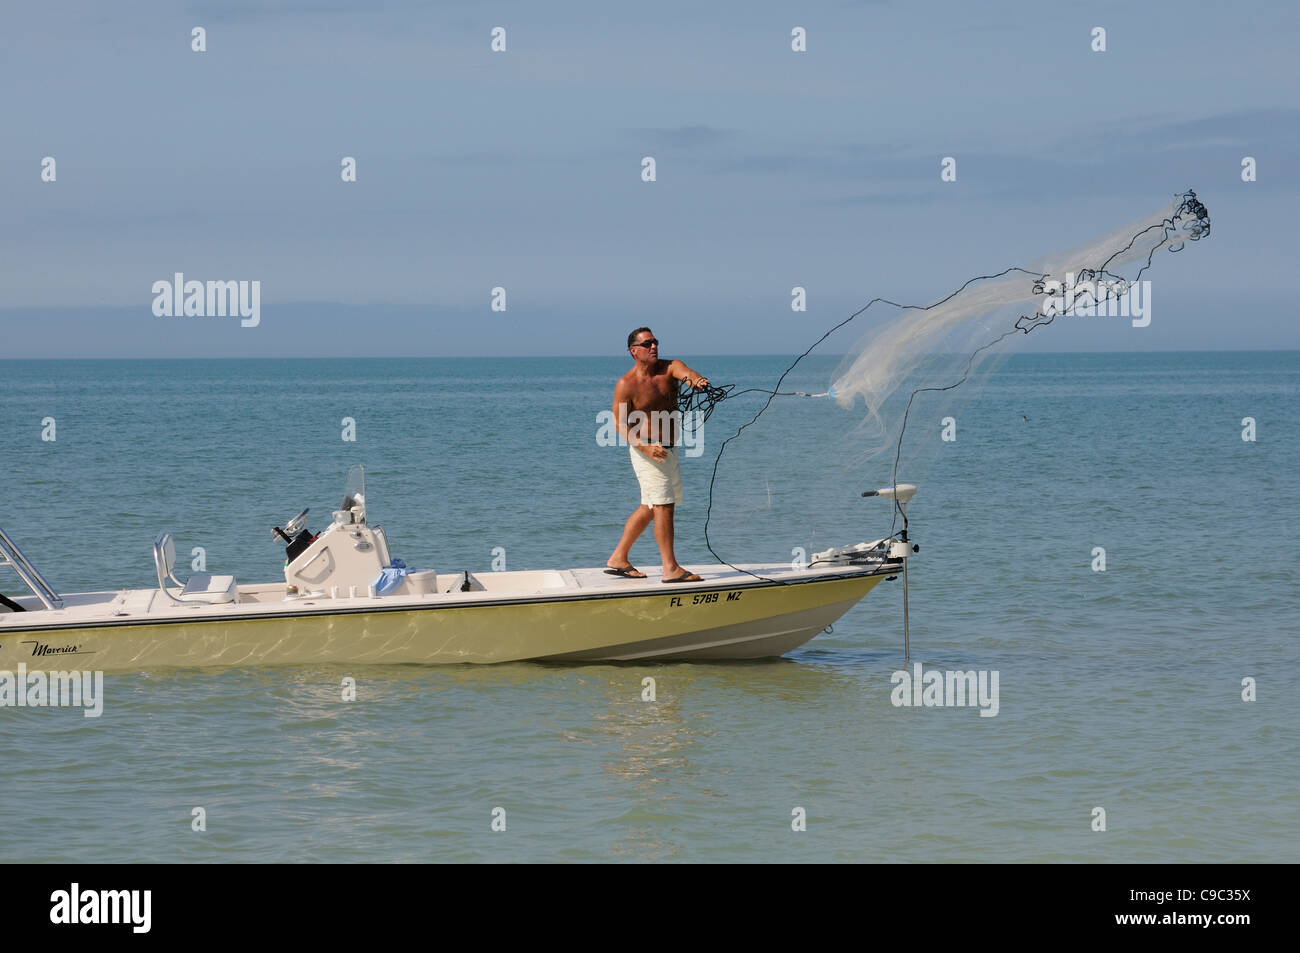 https://c8.alamy.com/comp/C9C35X/man-throwing-a-fishing-net-from-a-small-boat-on-the-gulf-coast-florida-C9C35X.jpg